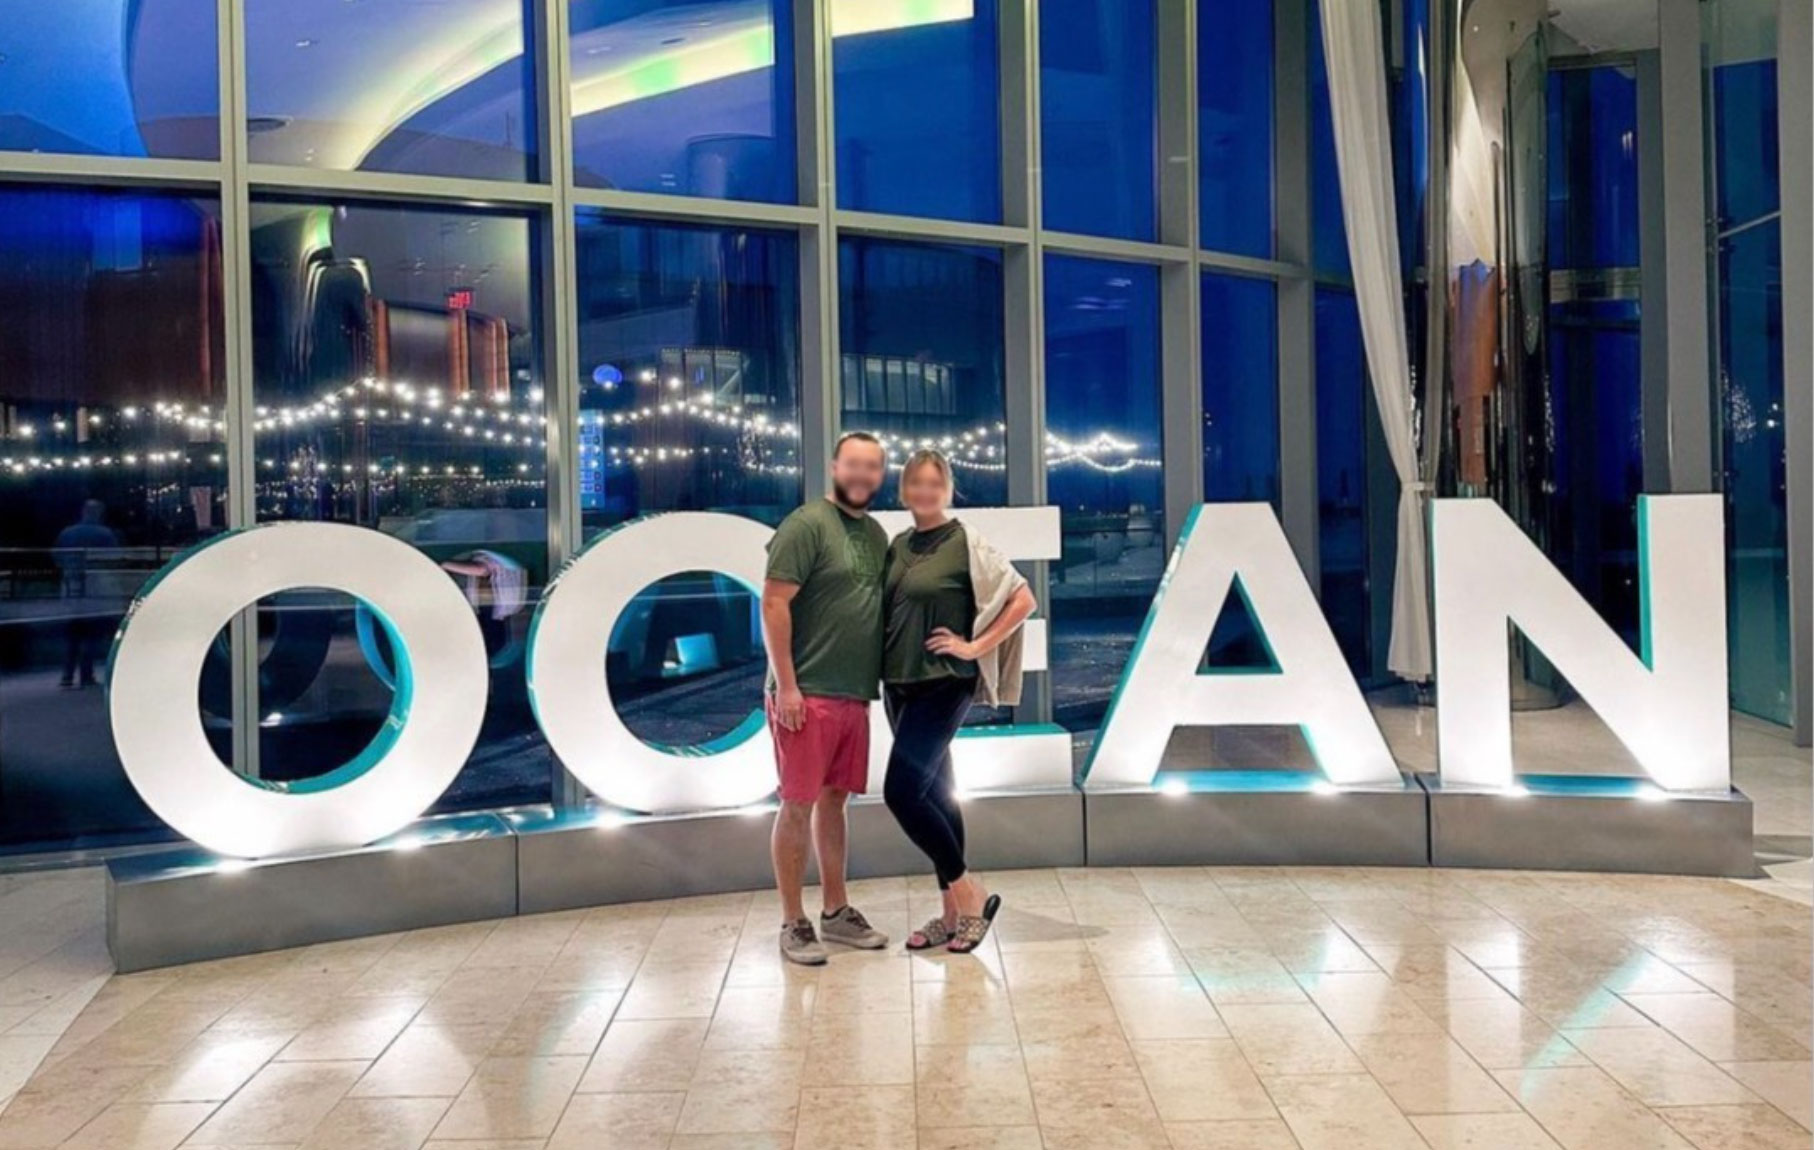 Ocean Casino Atlantic City Large Metal Letters Illuminated